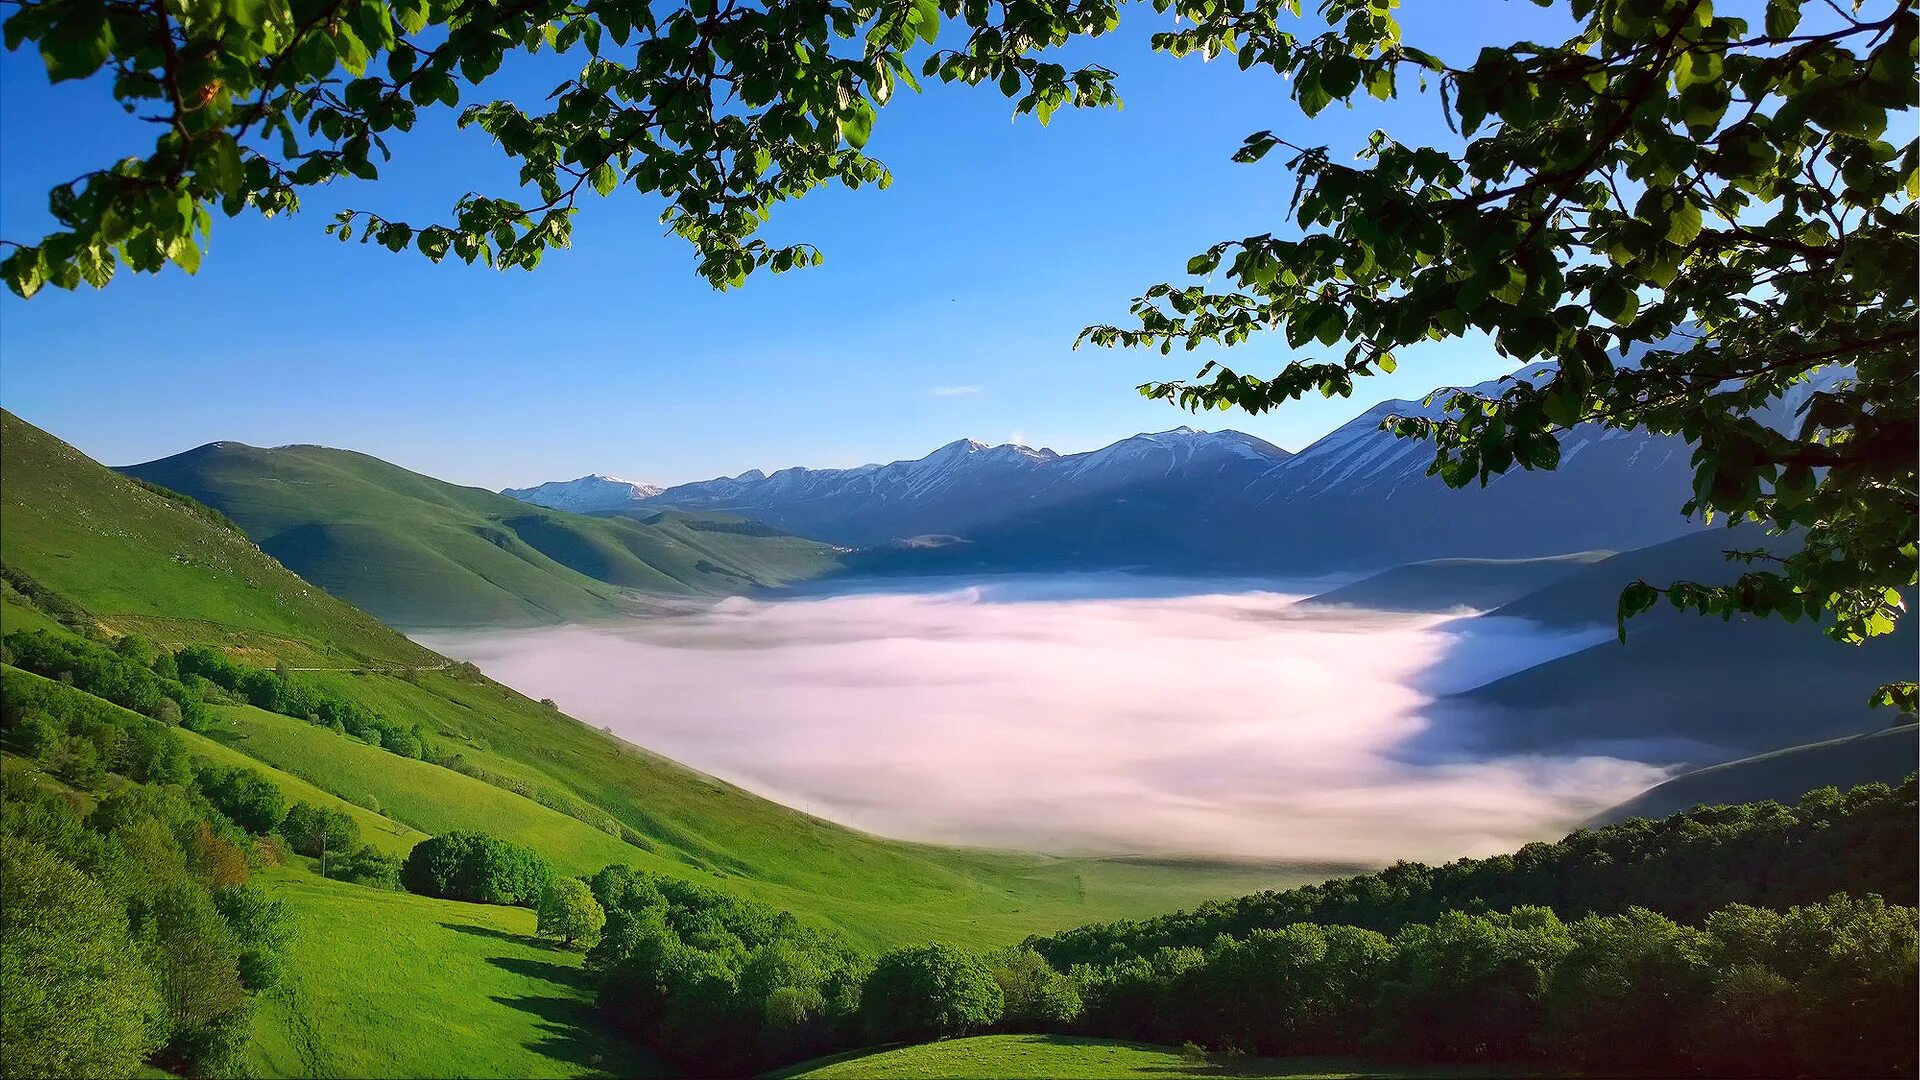 Апеннинские горы в Италии. Умбрия озера. Монти Сибиллини Италия. Грин Маунтин гора. Холм живая природа